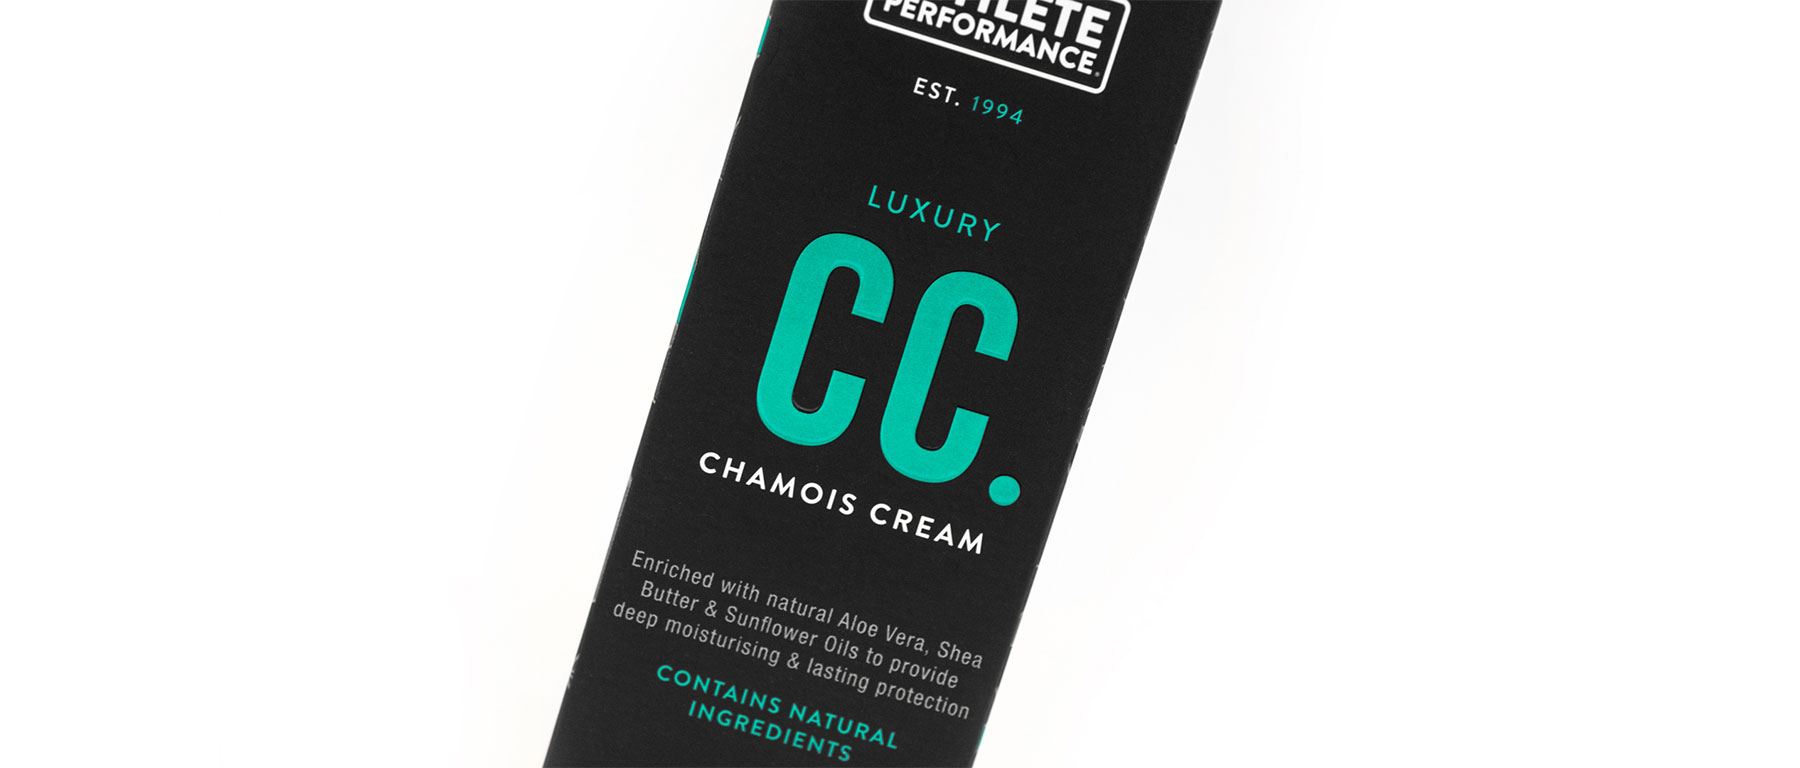 Muc-Off Luxury Chamois Cream